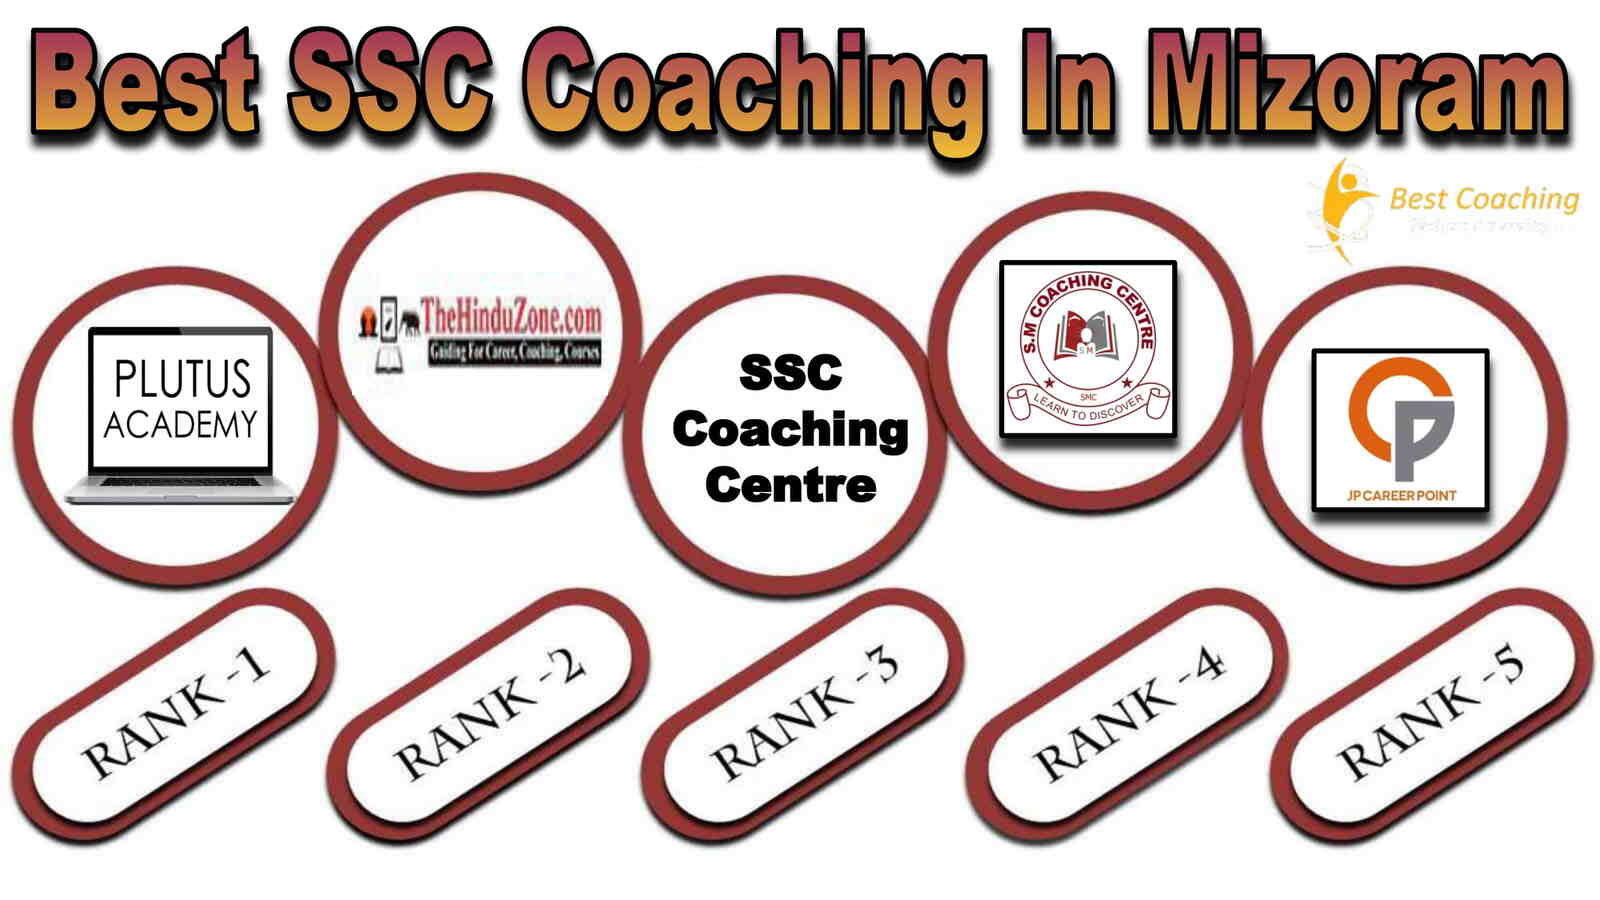 Best SSC Coaching in Mizoram